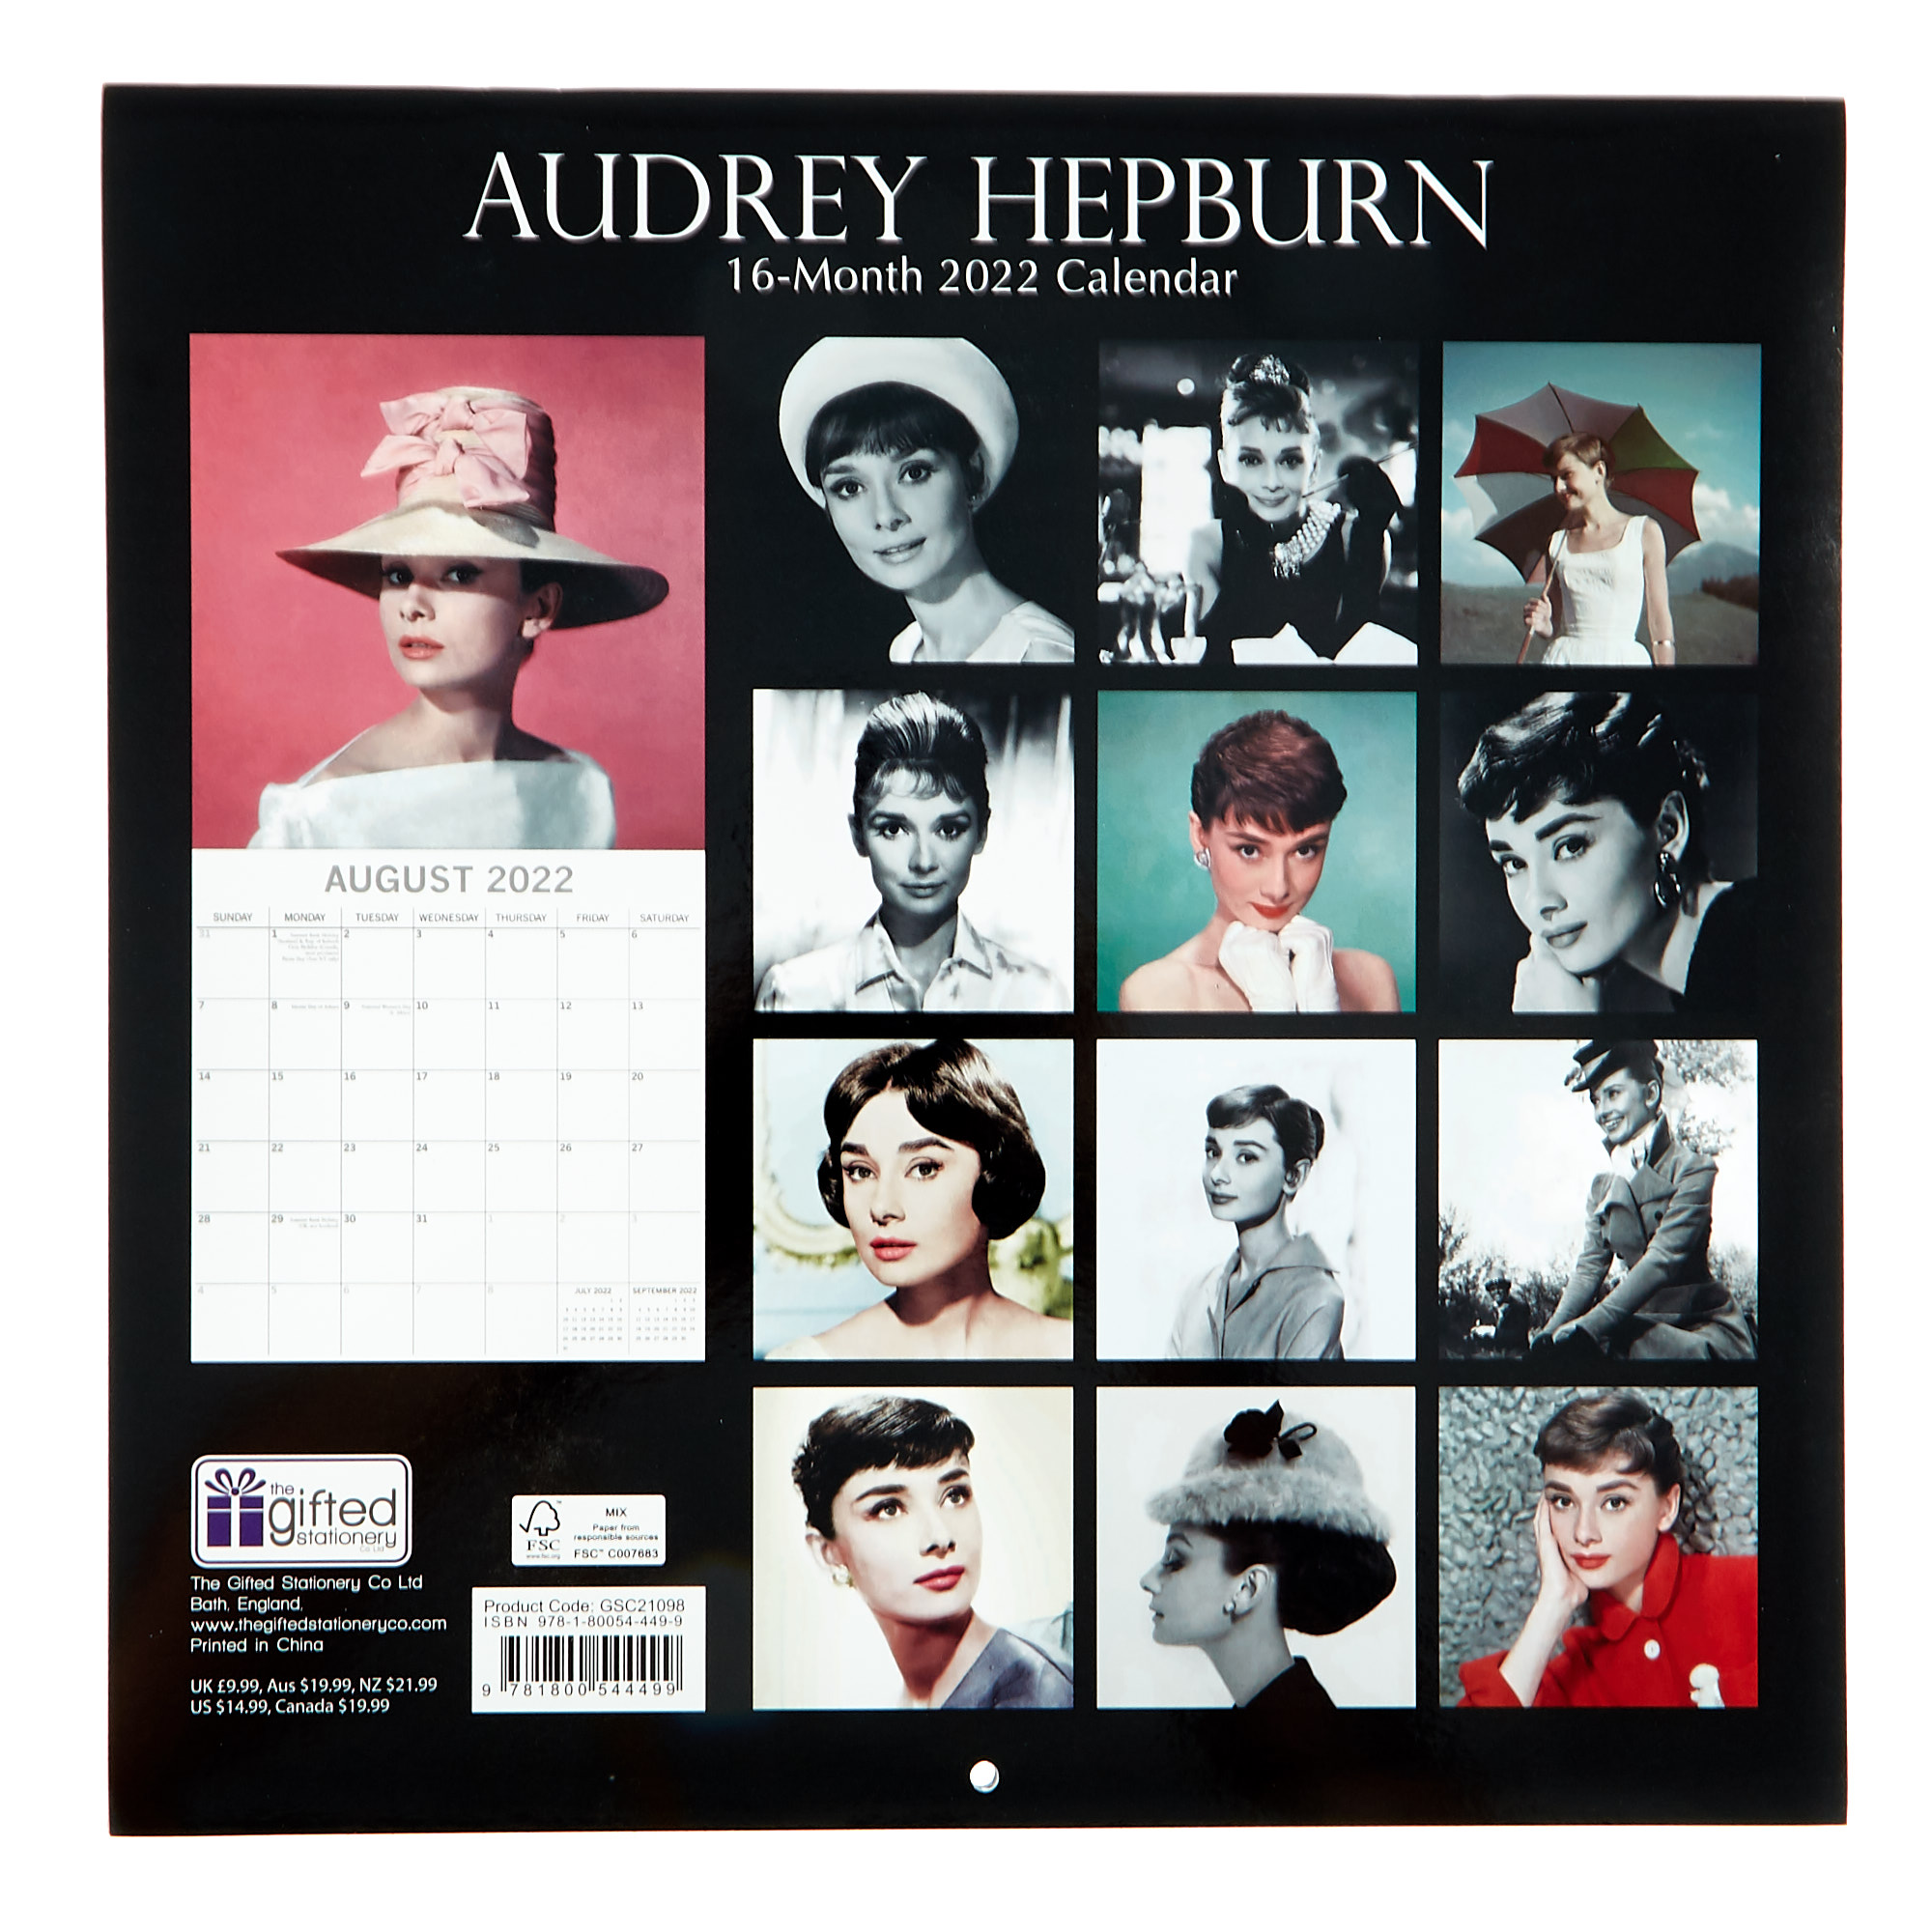 Audrey Hepburn 16-Month 2022 Calendar